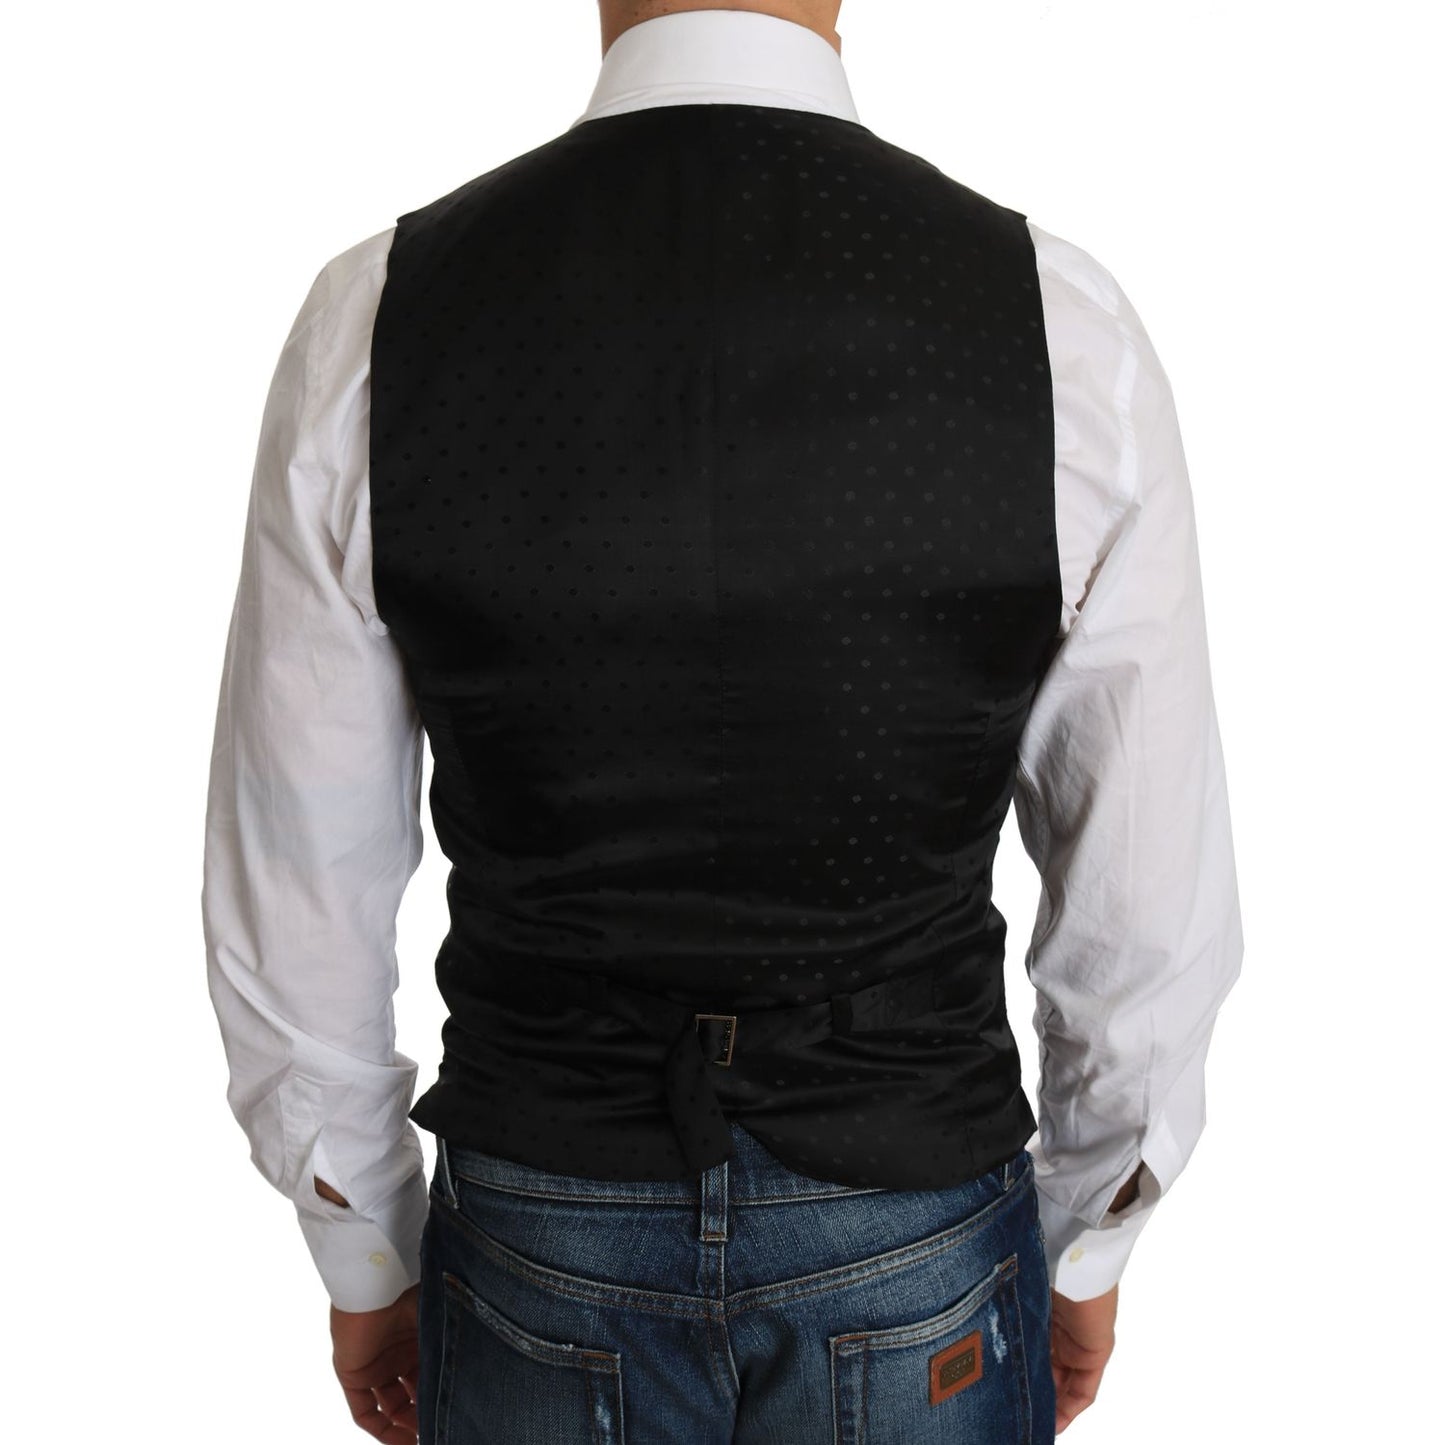 Dolce & Gabbana Sleek Black Wool Blend Formal Vest black-wool-dress-waistcoat-1